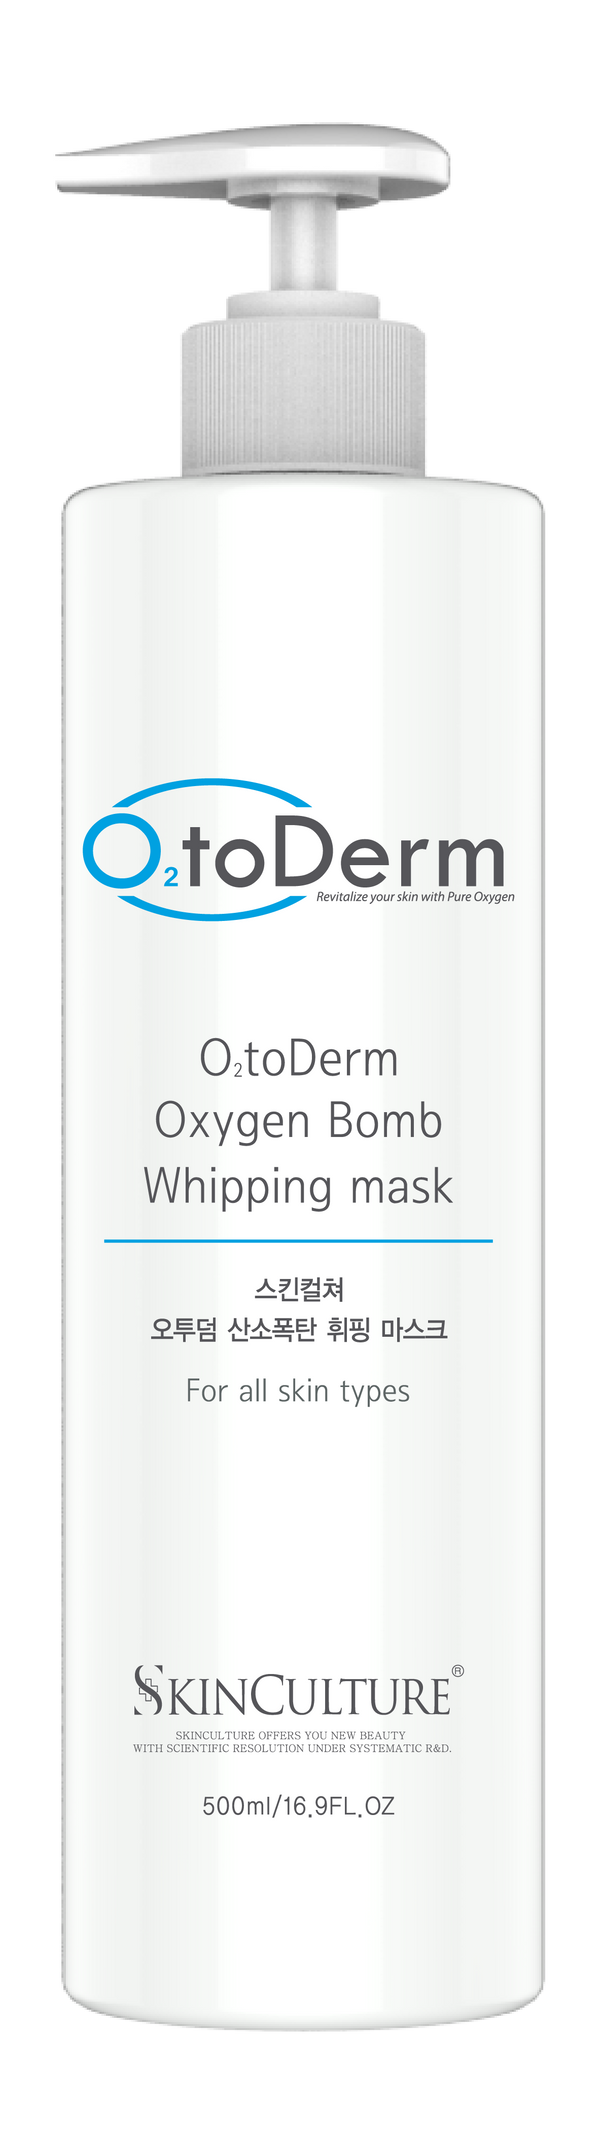 Oxygen Bomb Whipping Mask 250ml Retail $70 - O2toderm Treatment